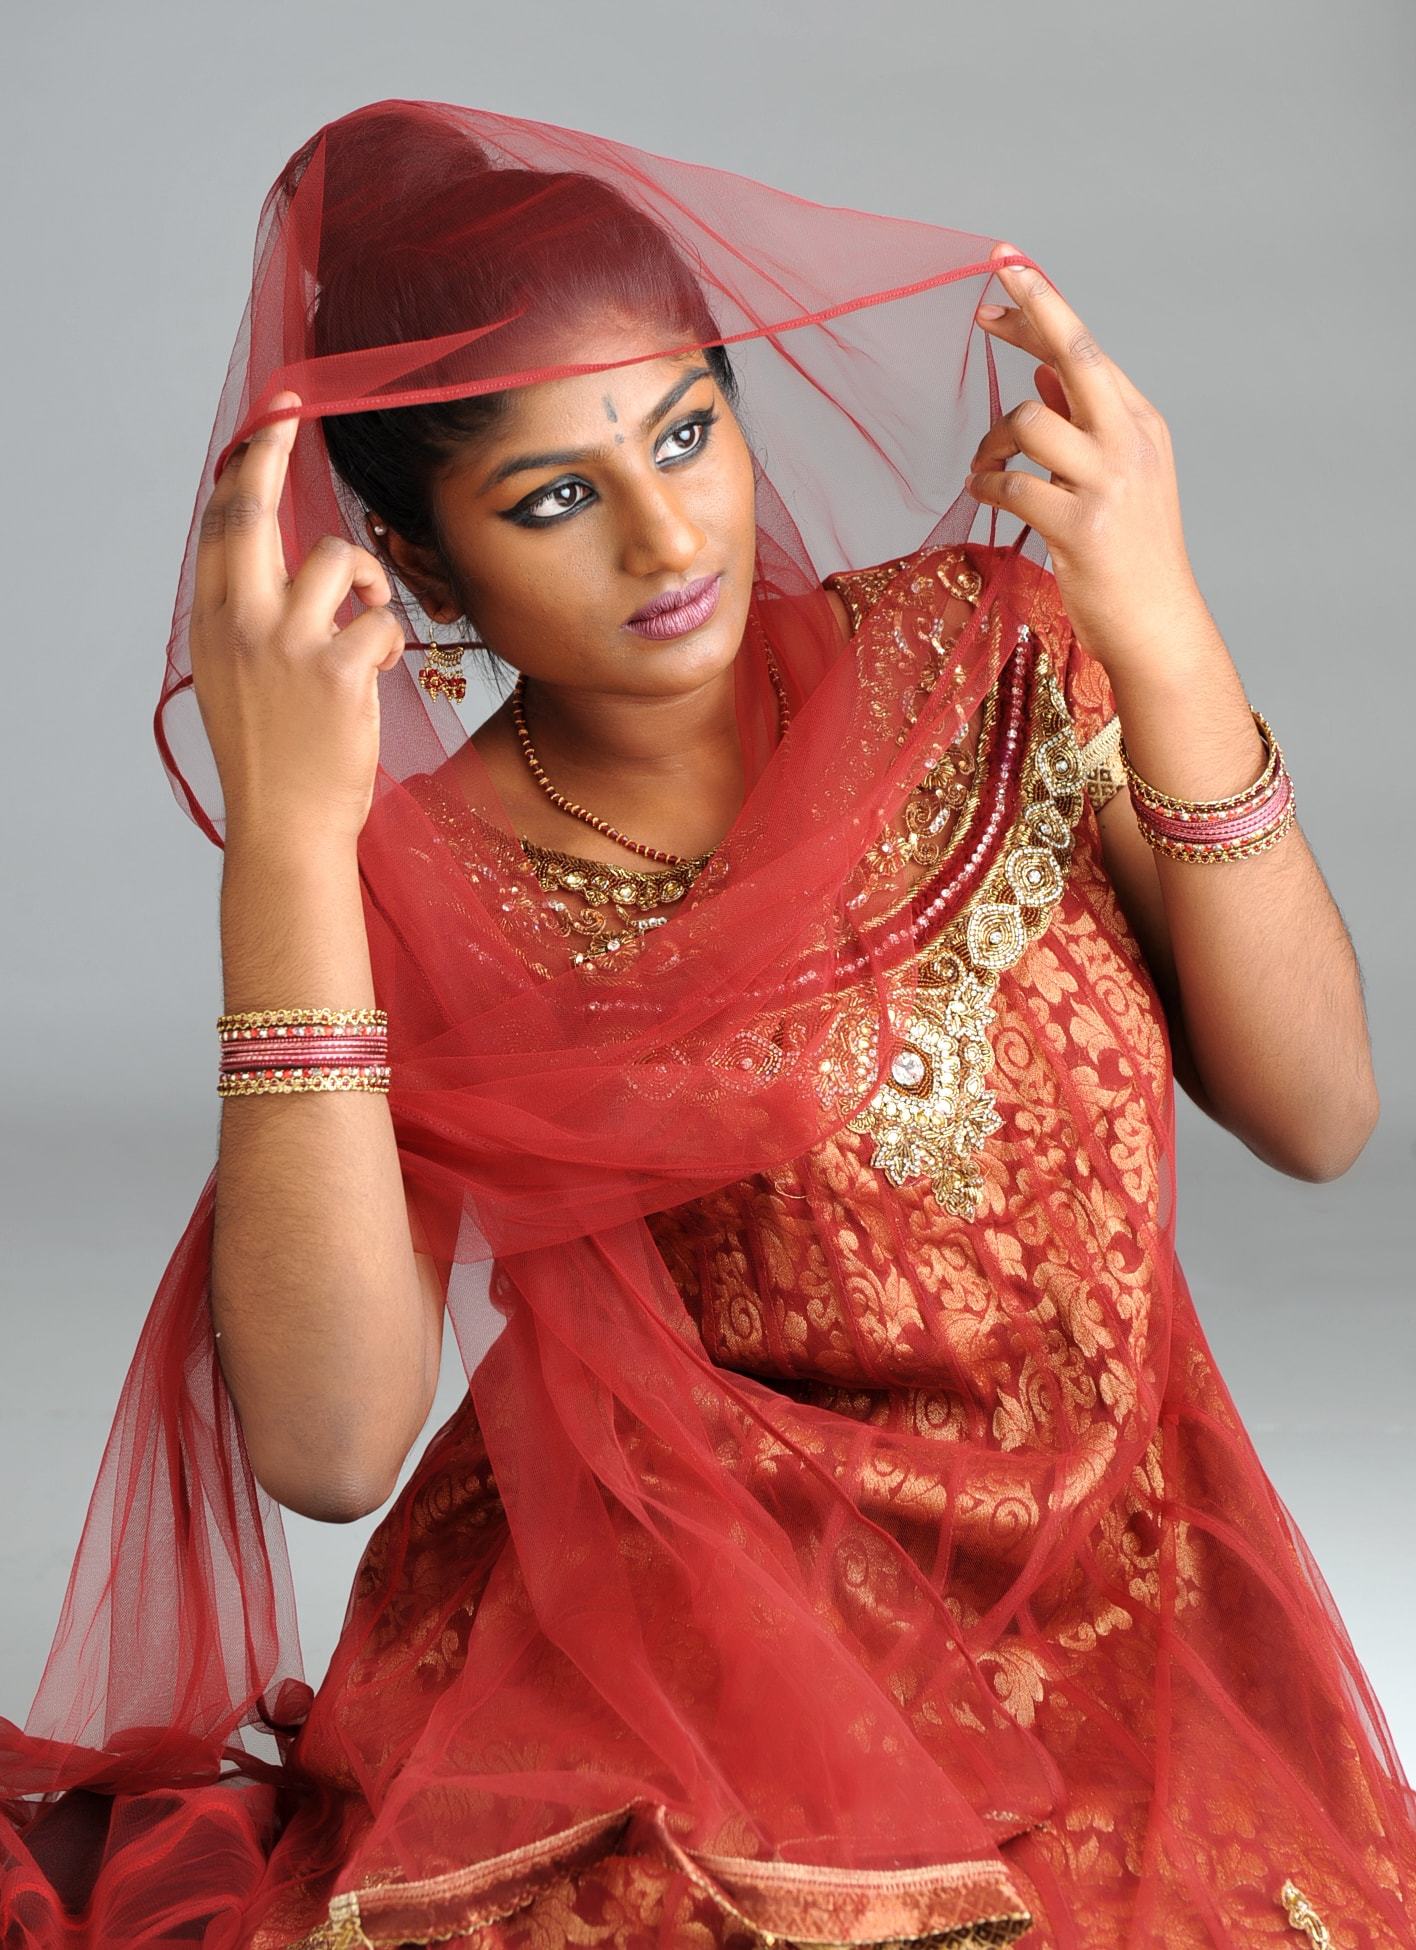 Descubra 100 image short hairstyle indian girl - Thptnganamst.edu.vn